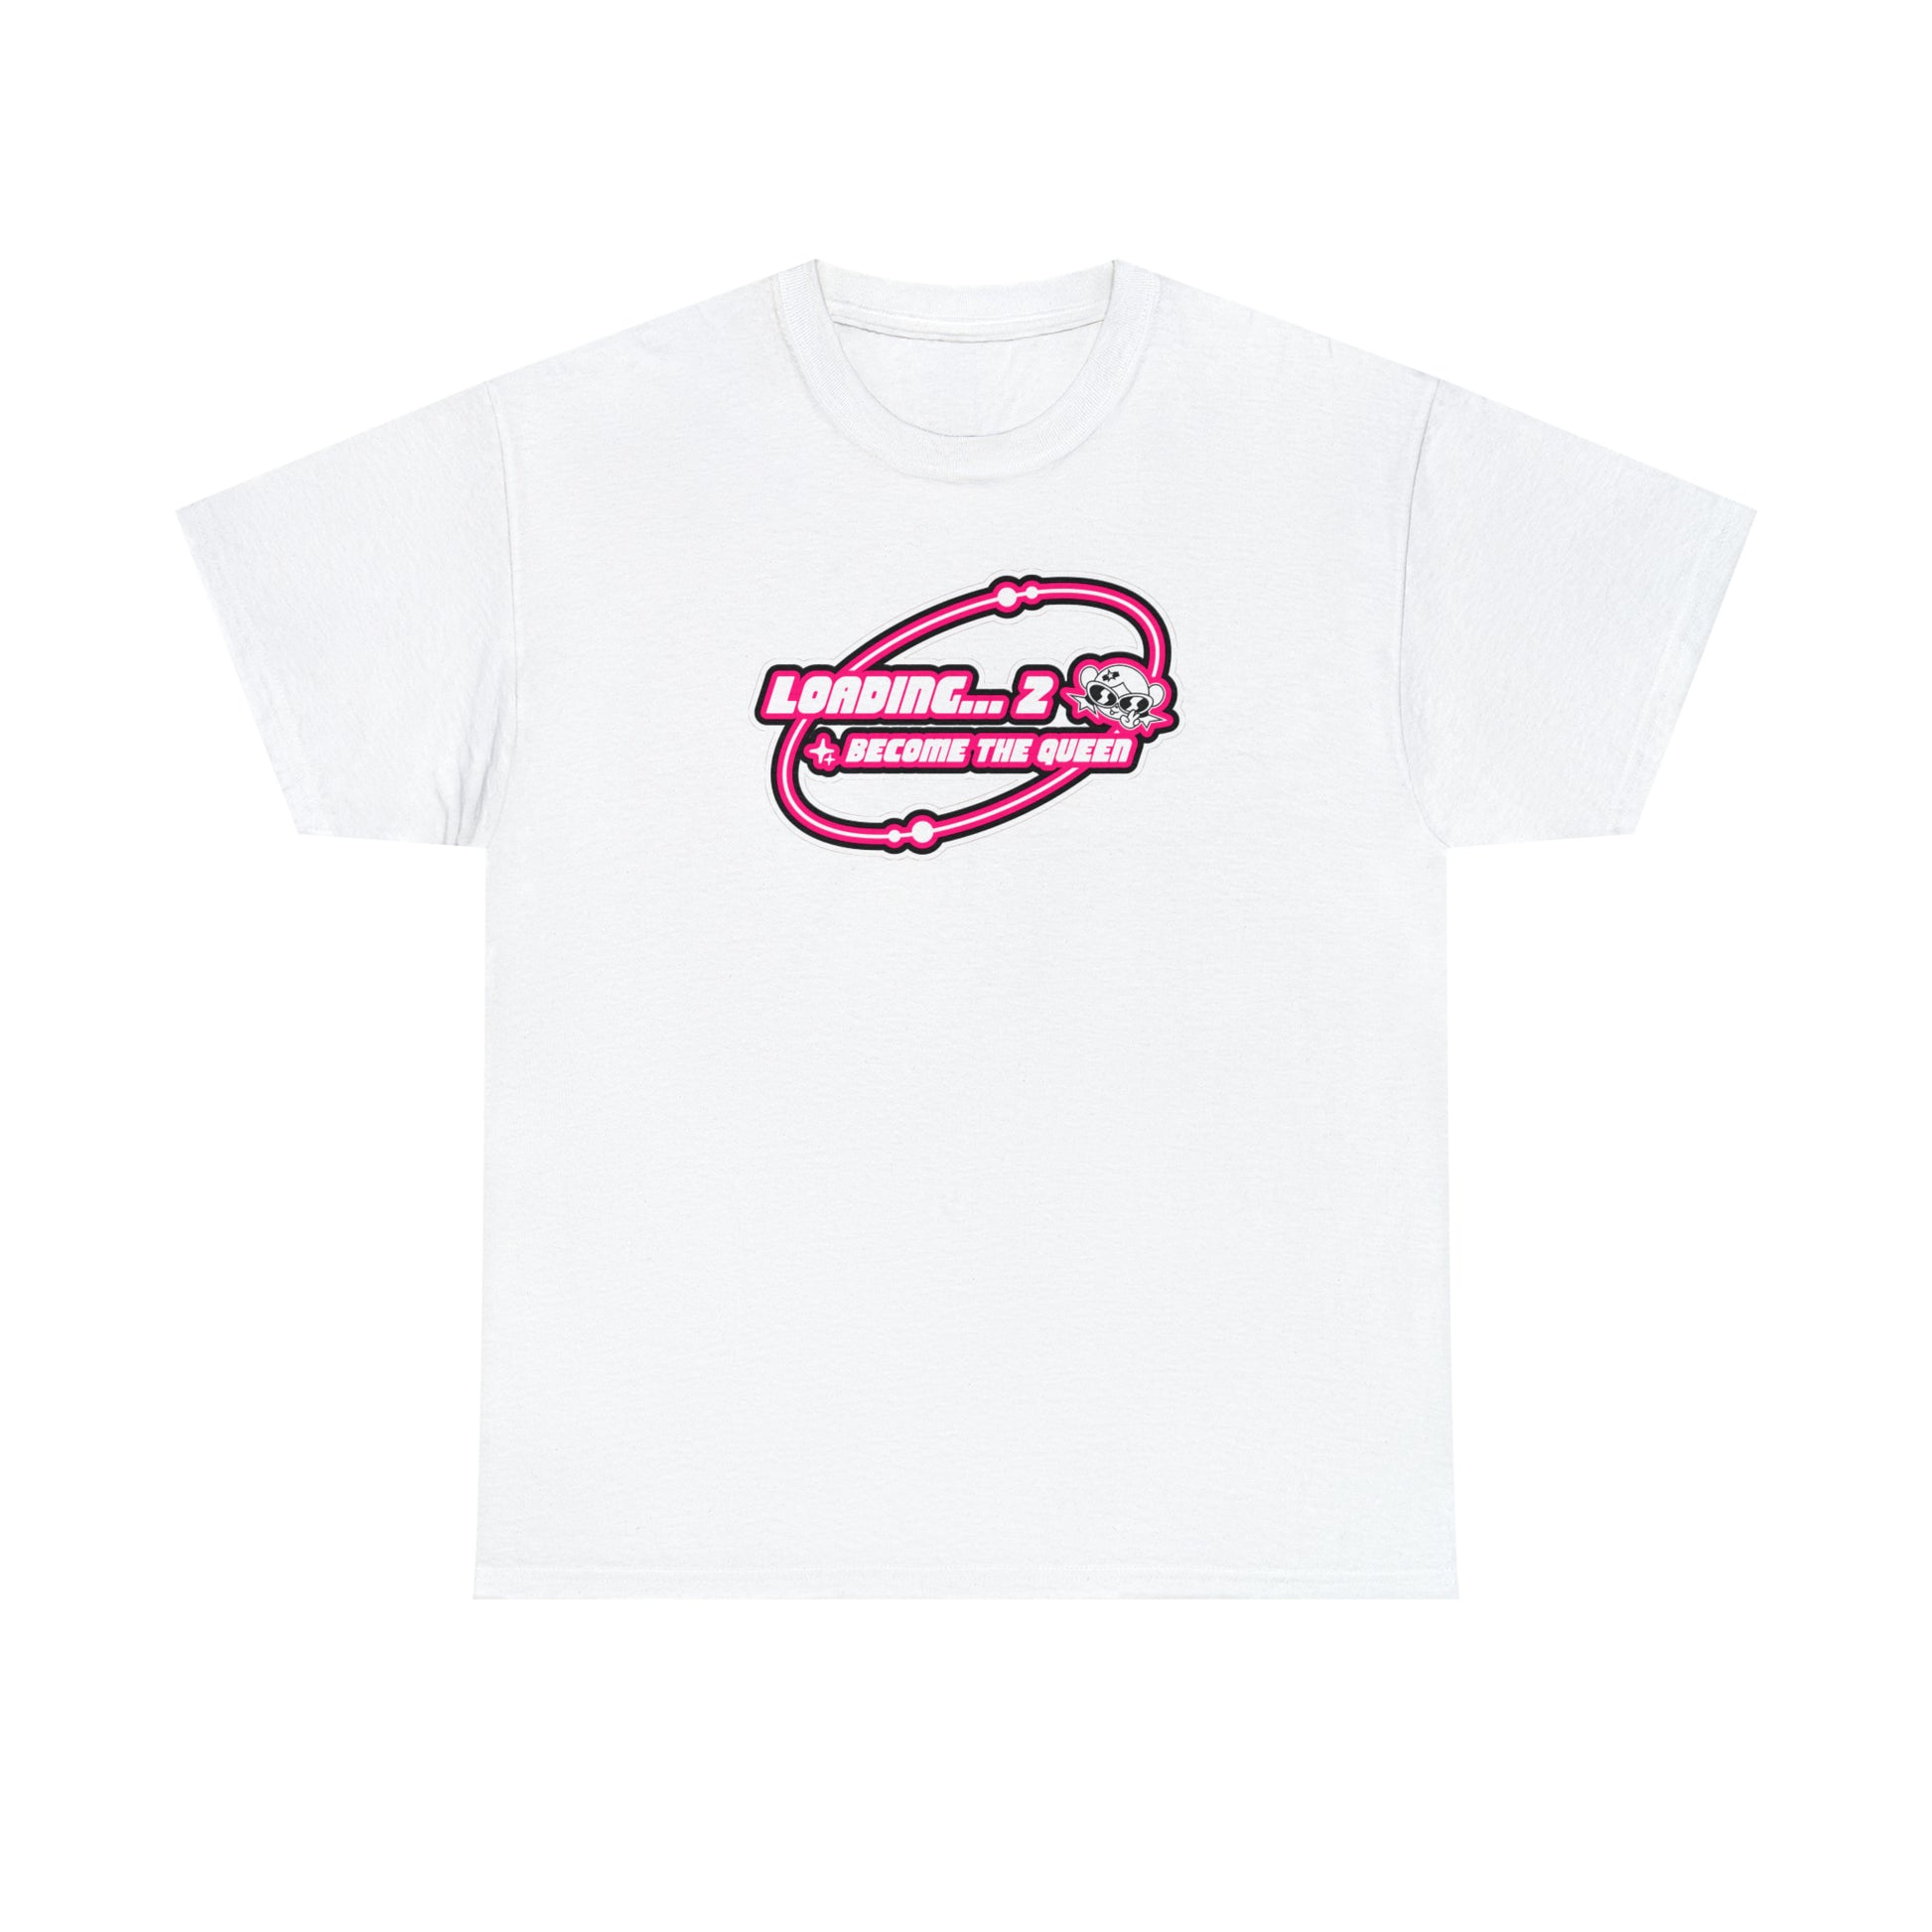 Y2K shirt  |  Y2K Clothing  |  Y2K Fashion shirt  |  Loading shirt  |  Streetwear shirt | Unisex shirt -  L2KBoutique